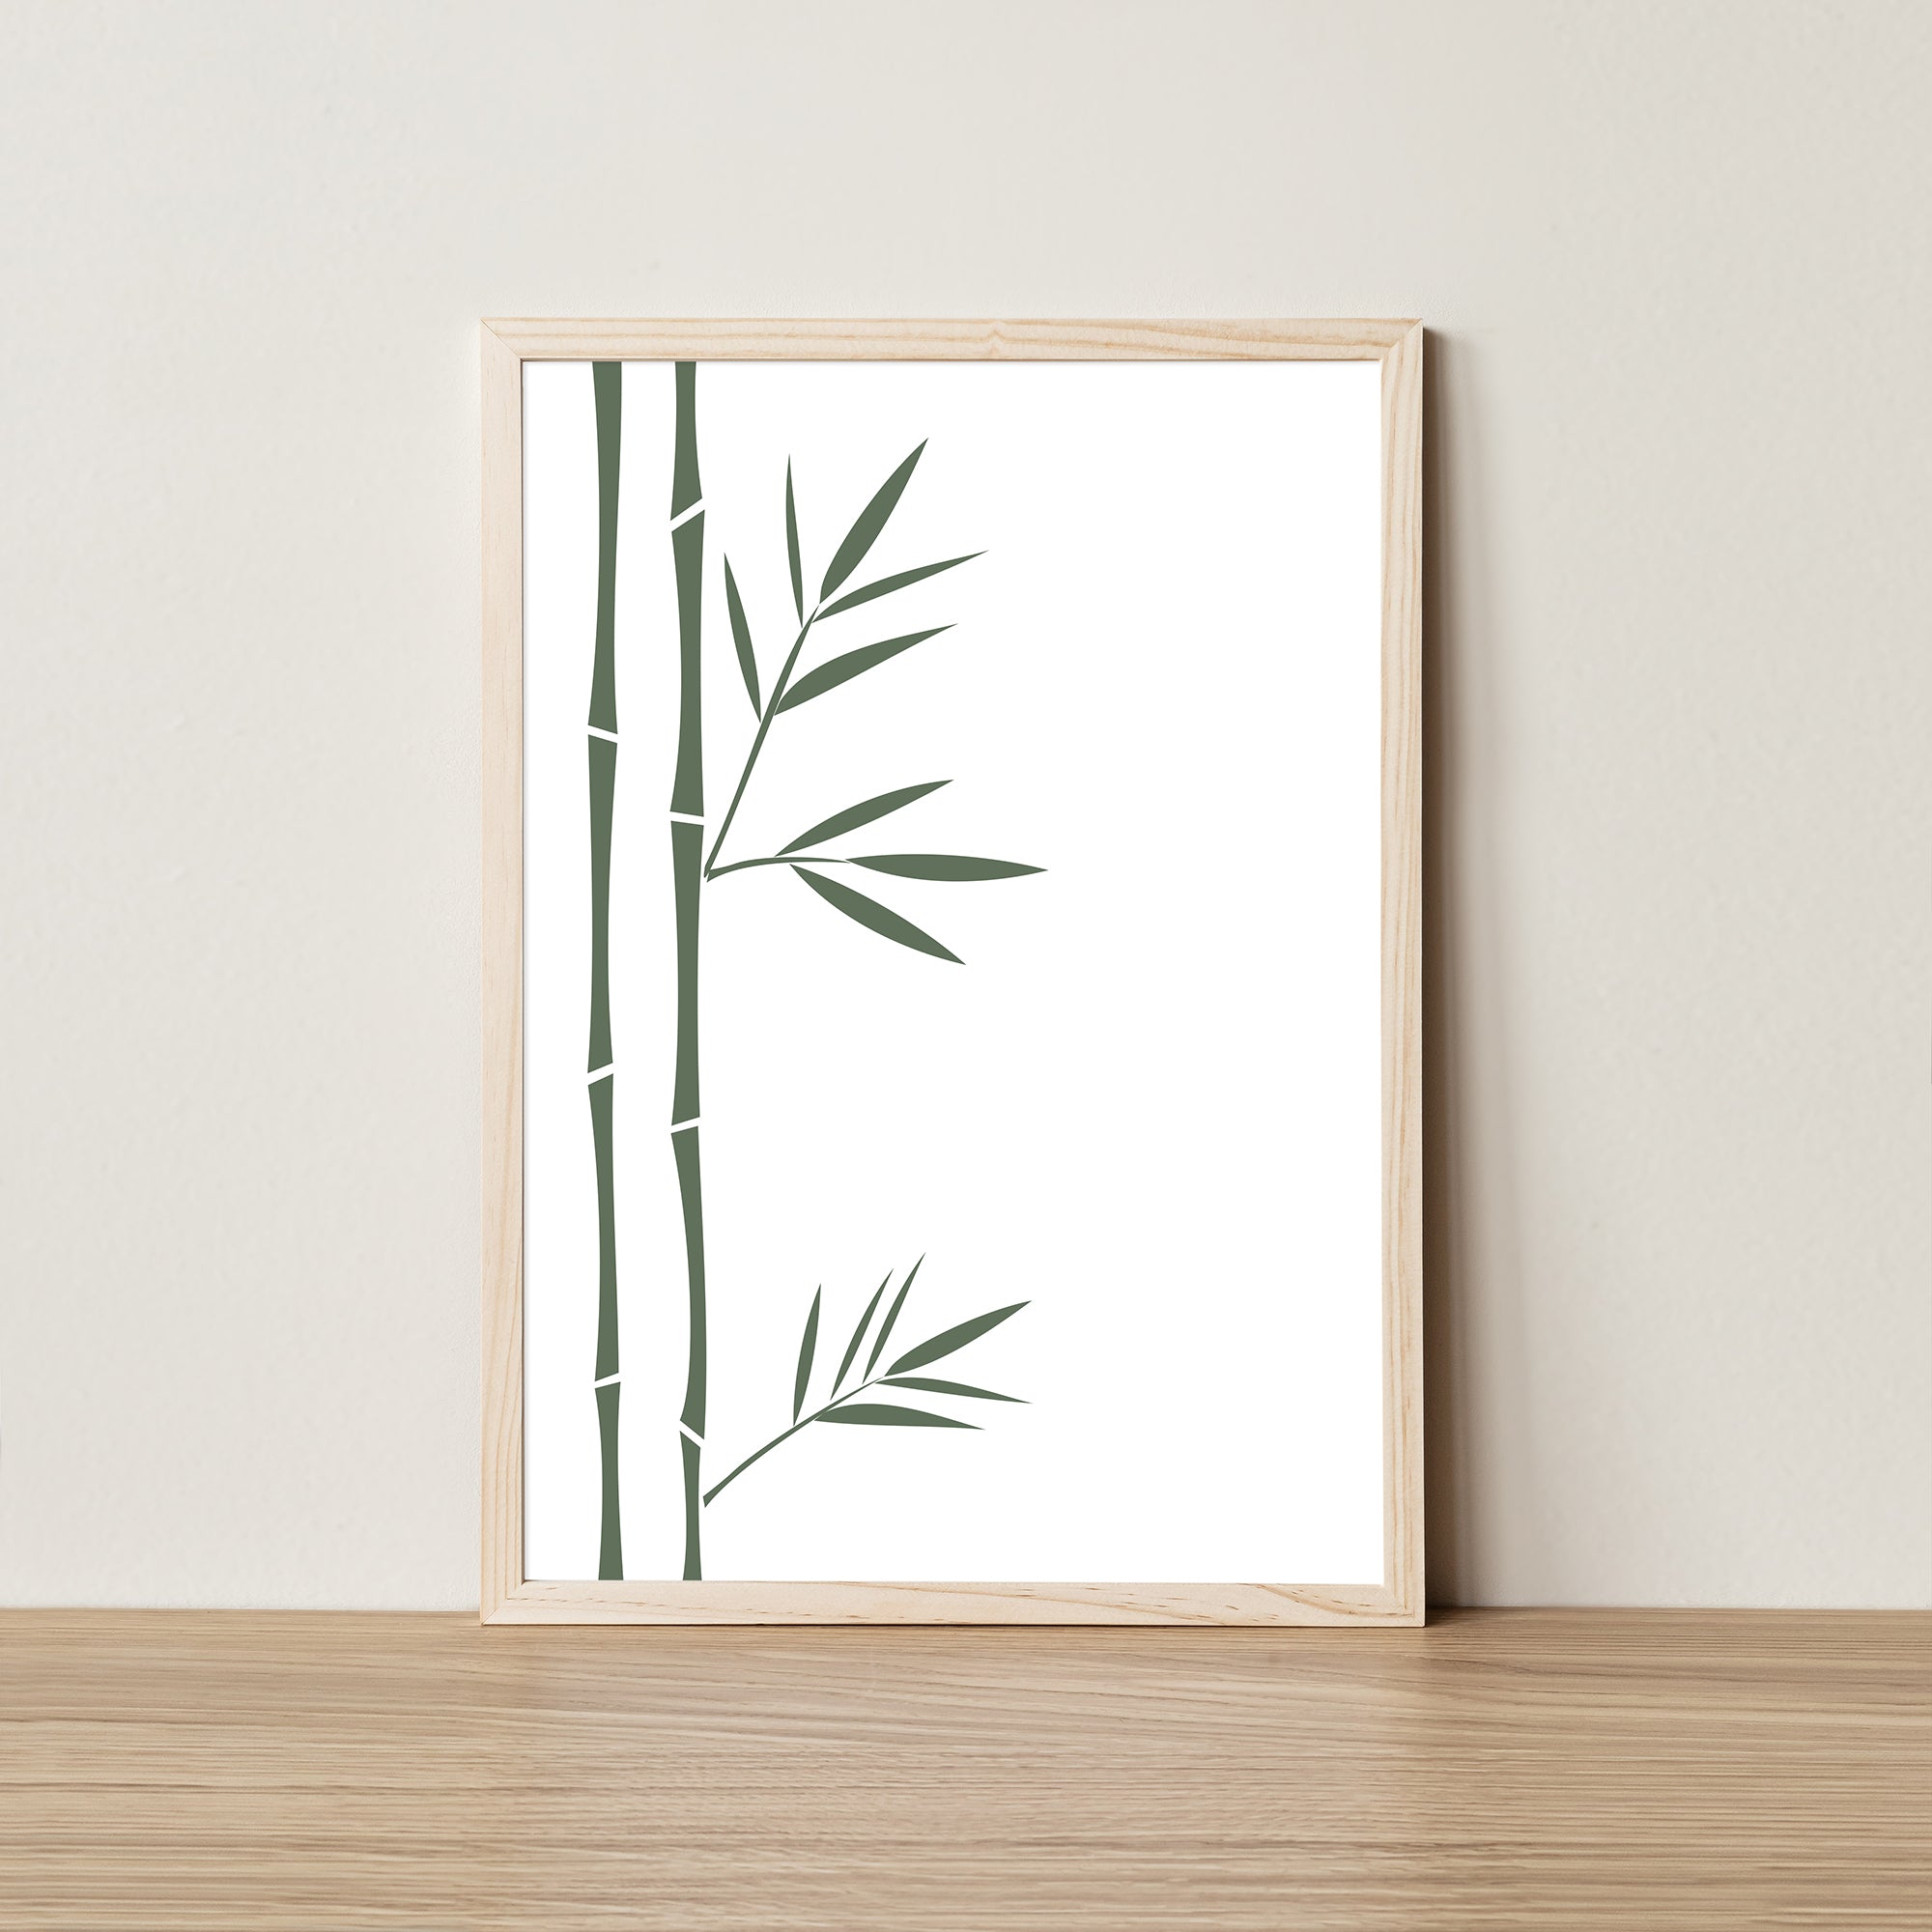 bamboo plant art print poster wooden frame Elemente Design 